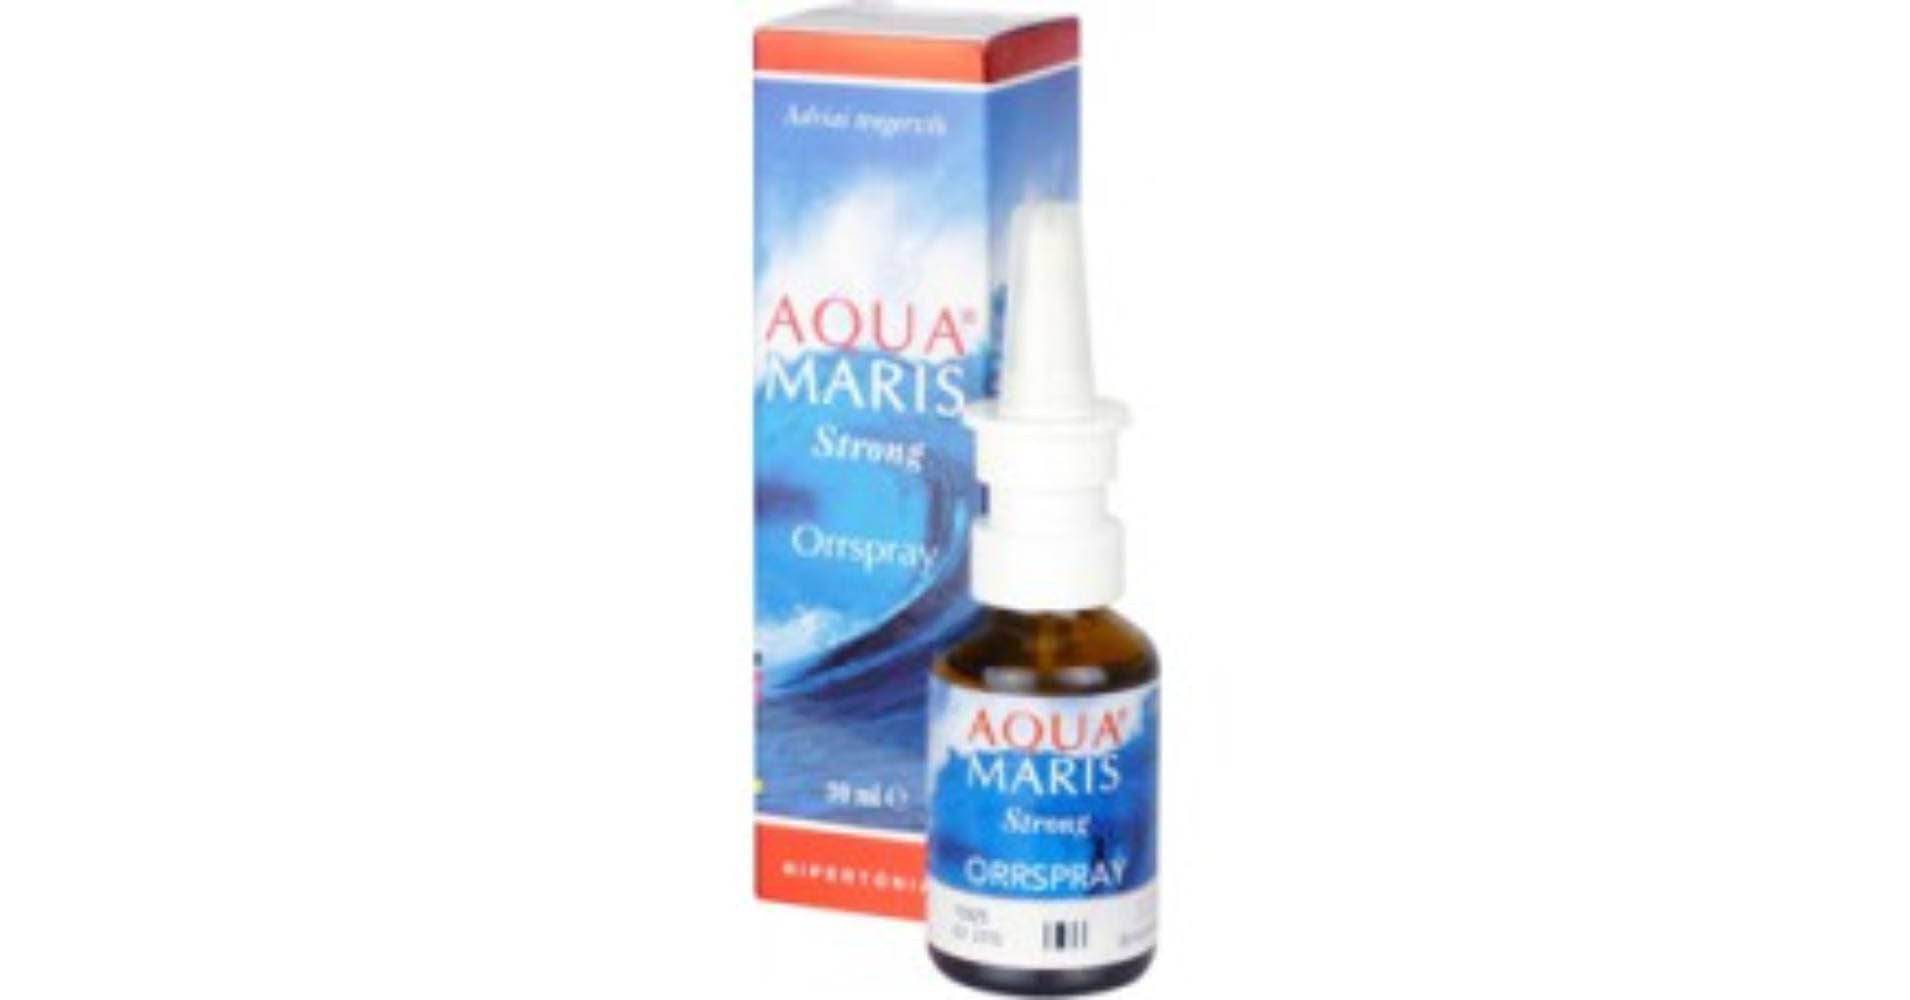  Aqua Maris strong orrspray 